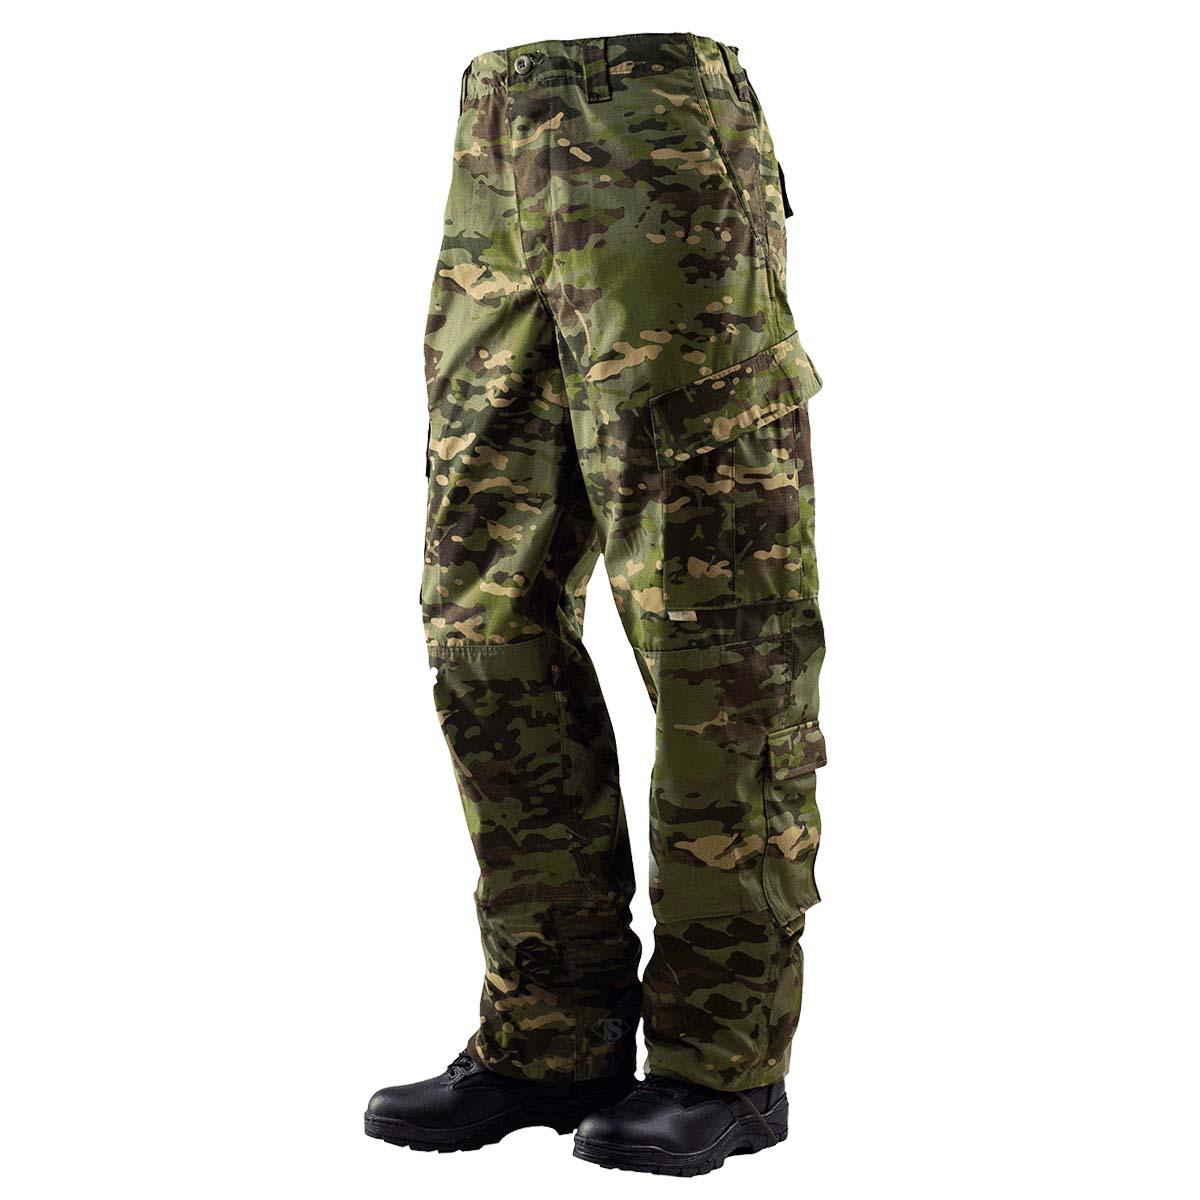 Pants - Tru-Spec TRU Camouflage Pants (Nylon/Cotton)